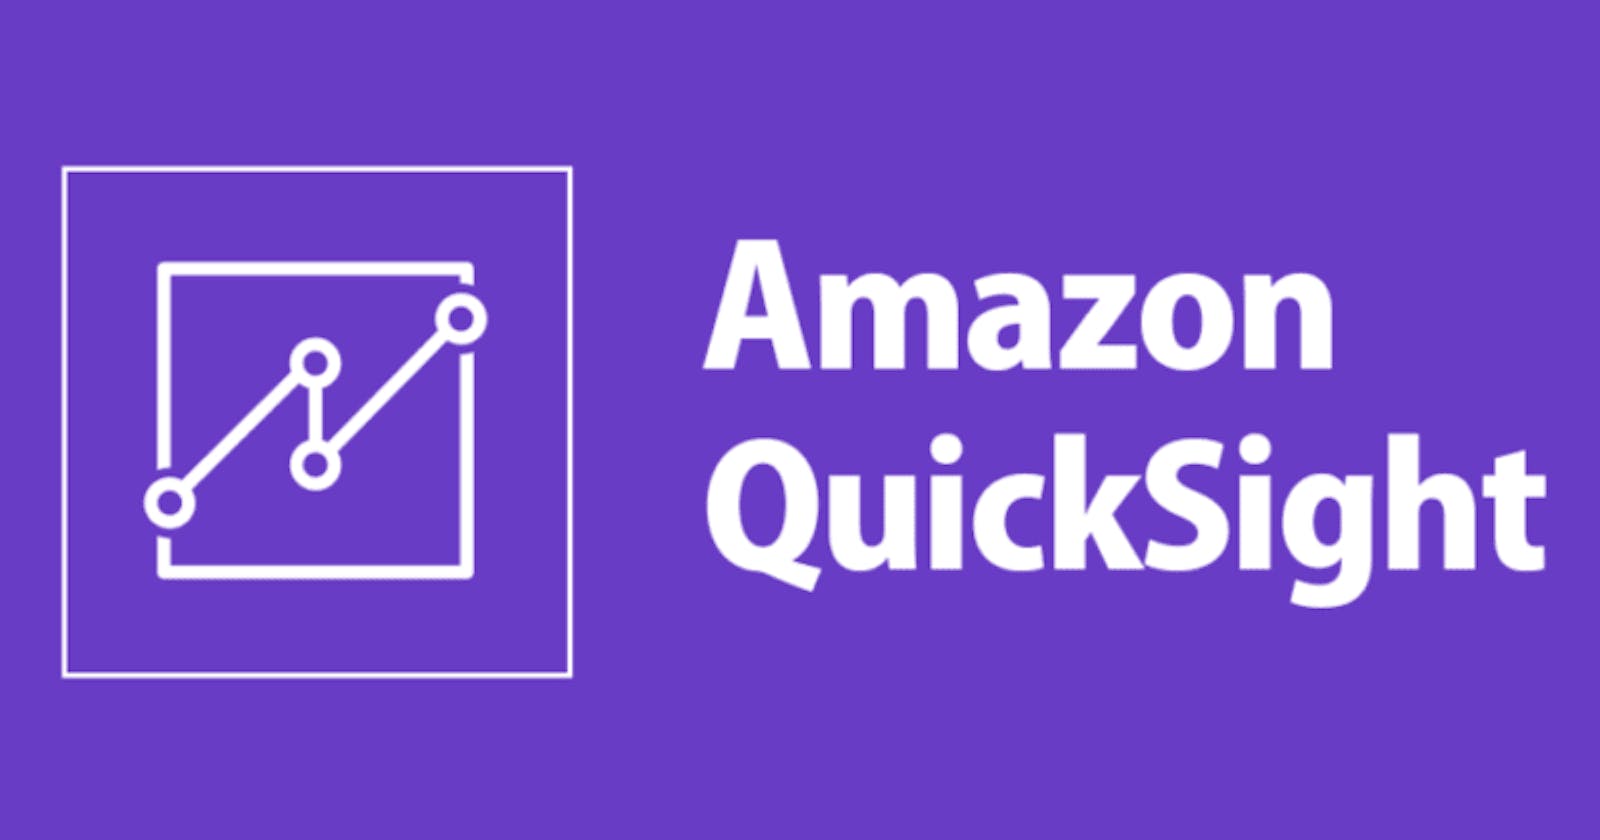 Introduction to Amazon QuickSight